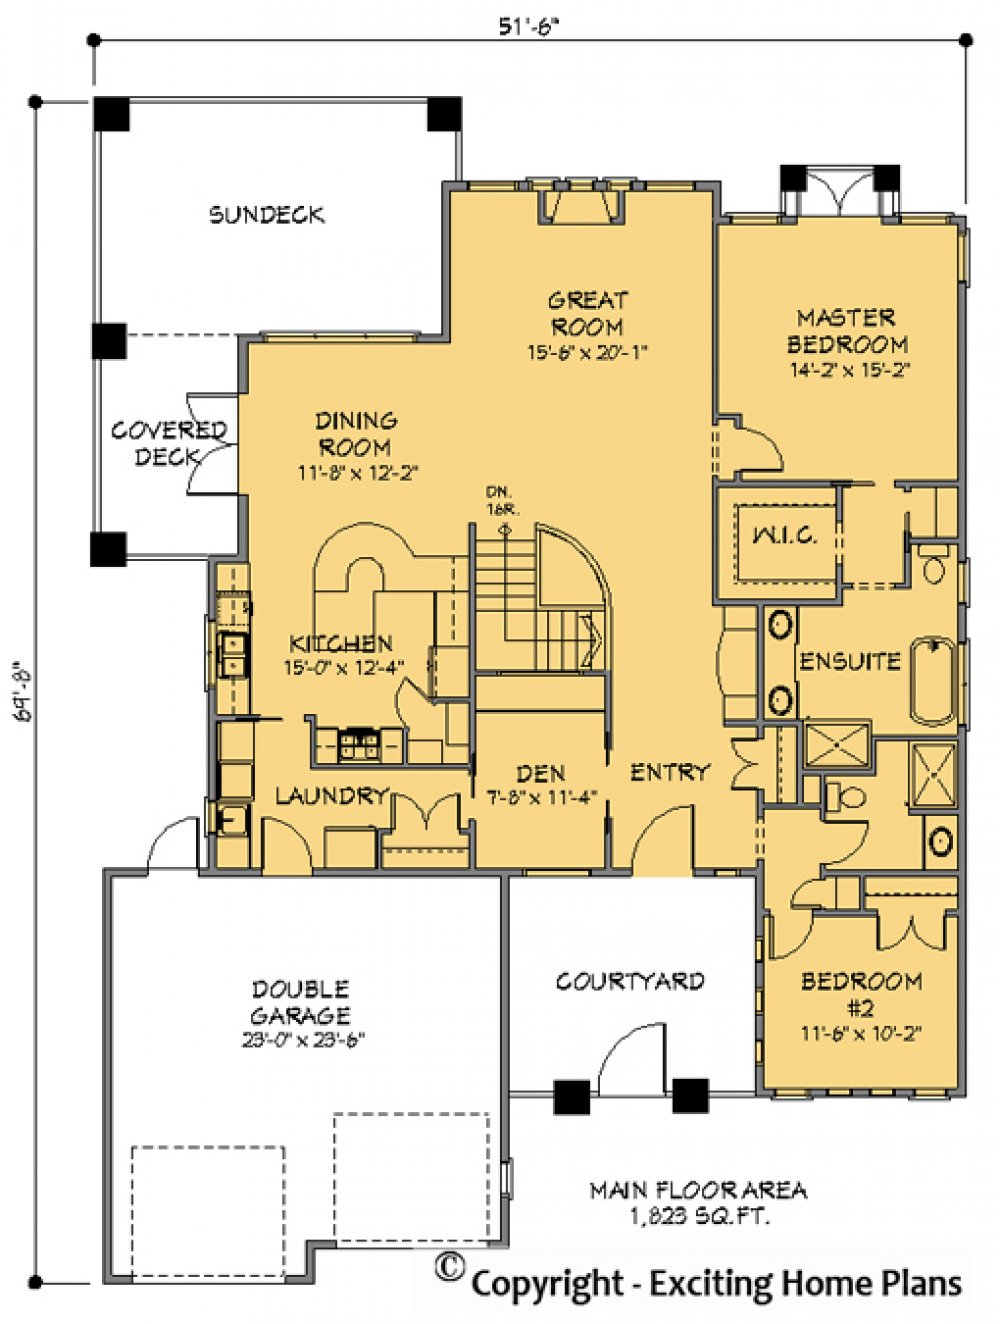 House Plan E1118-10  Main Floor Plan